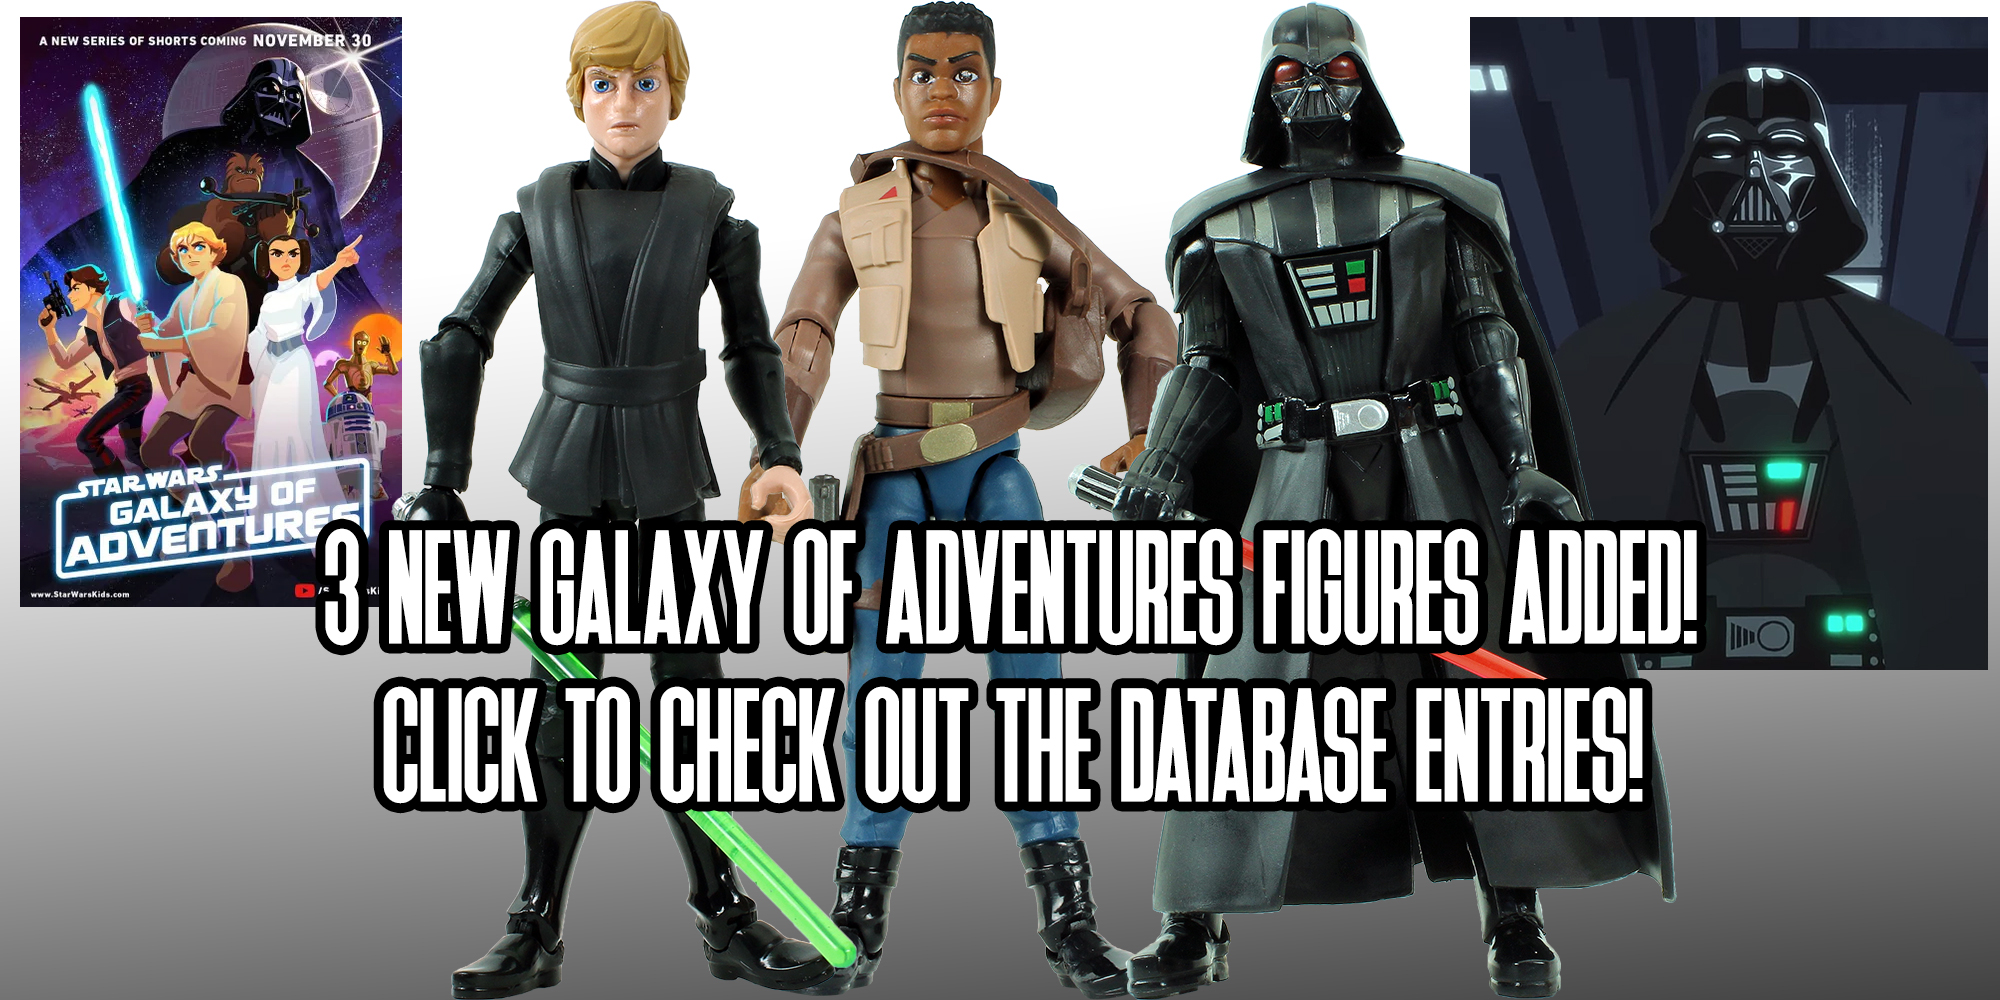 Galaxy Of Adventures Luke, Finn And Darth Vader Added!